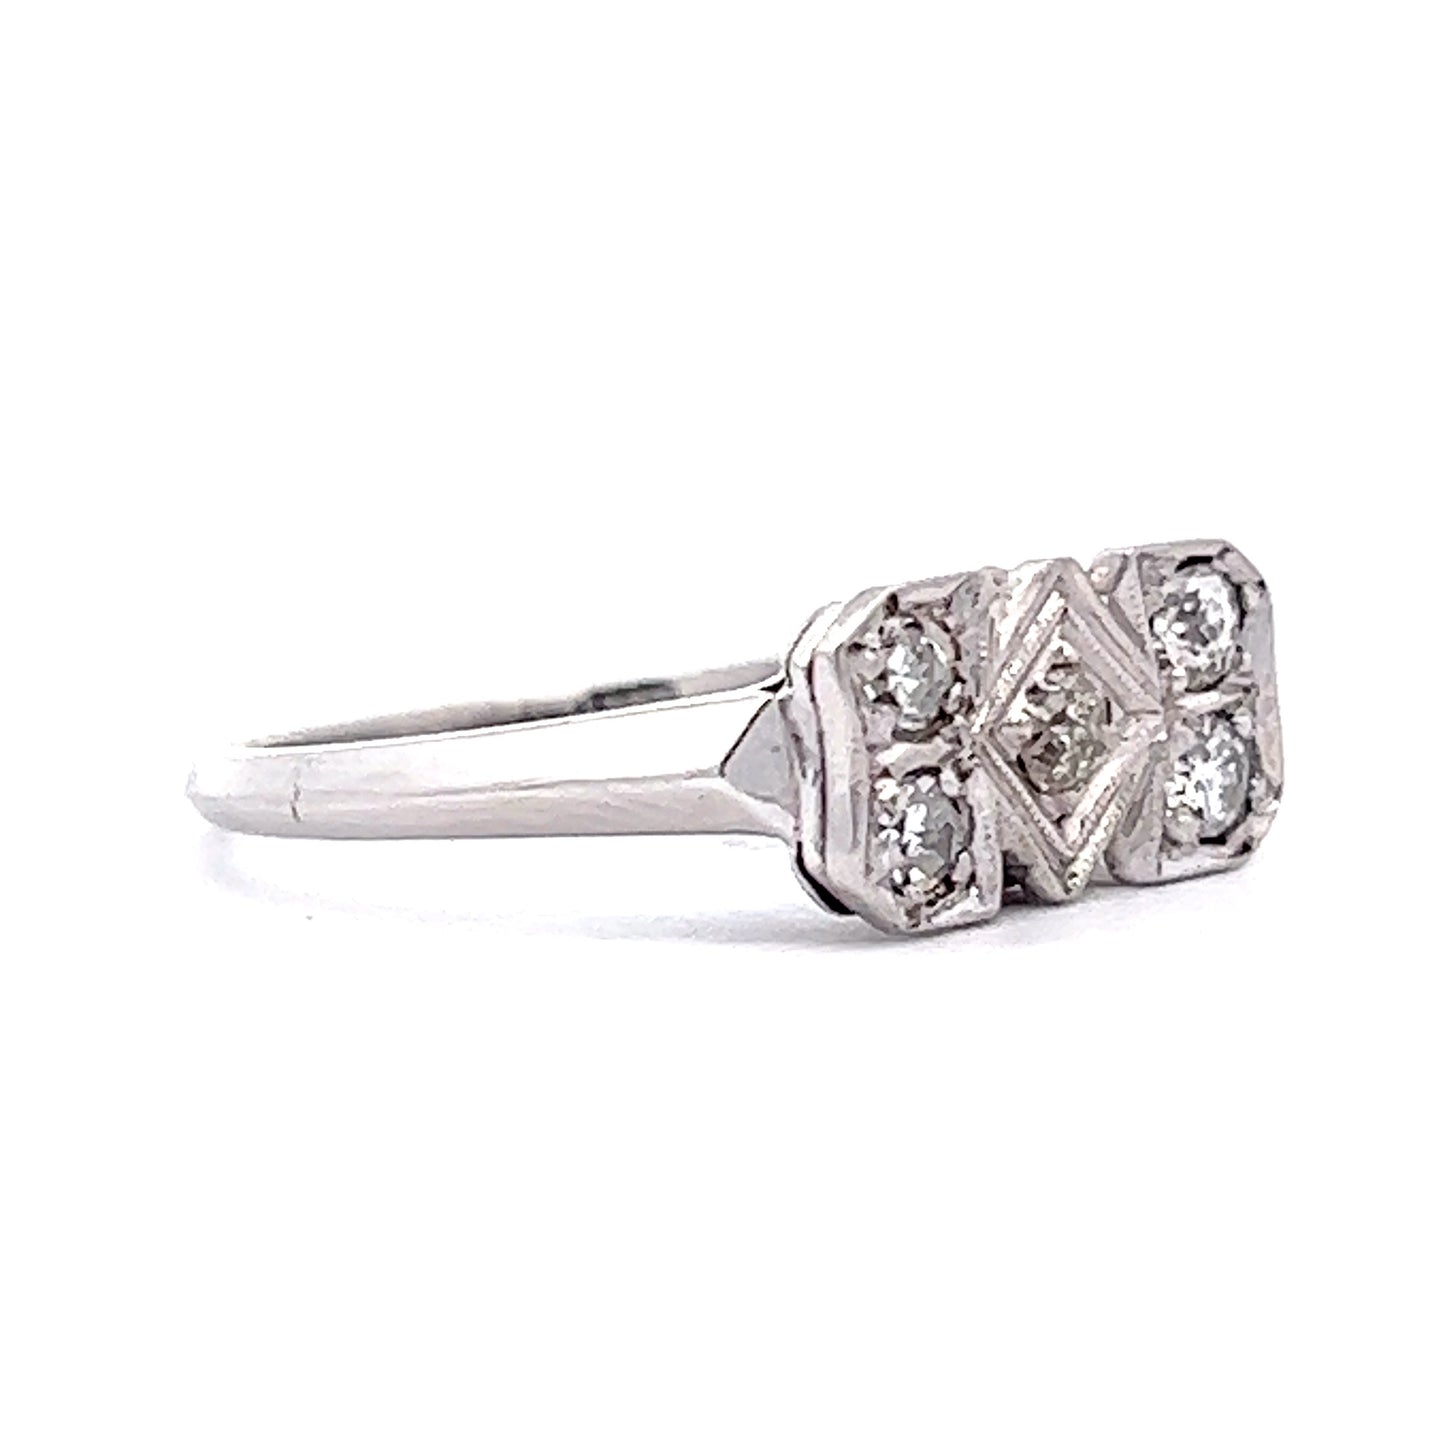 Vintage Art Deco Diamond Ring in 14k White Gold